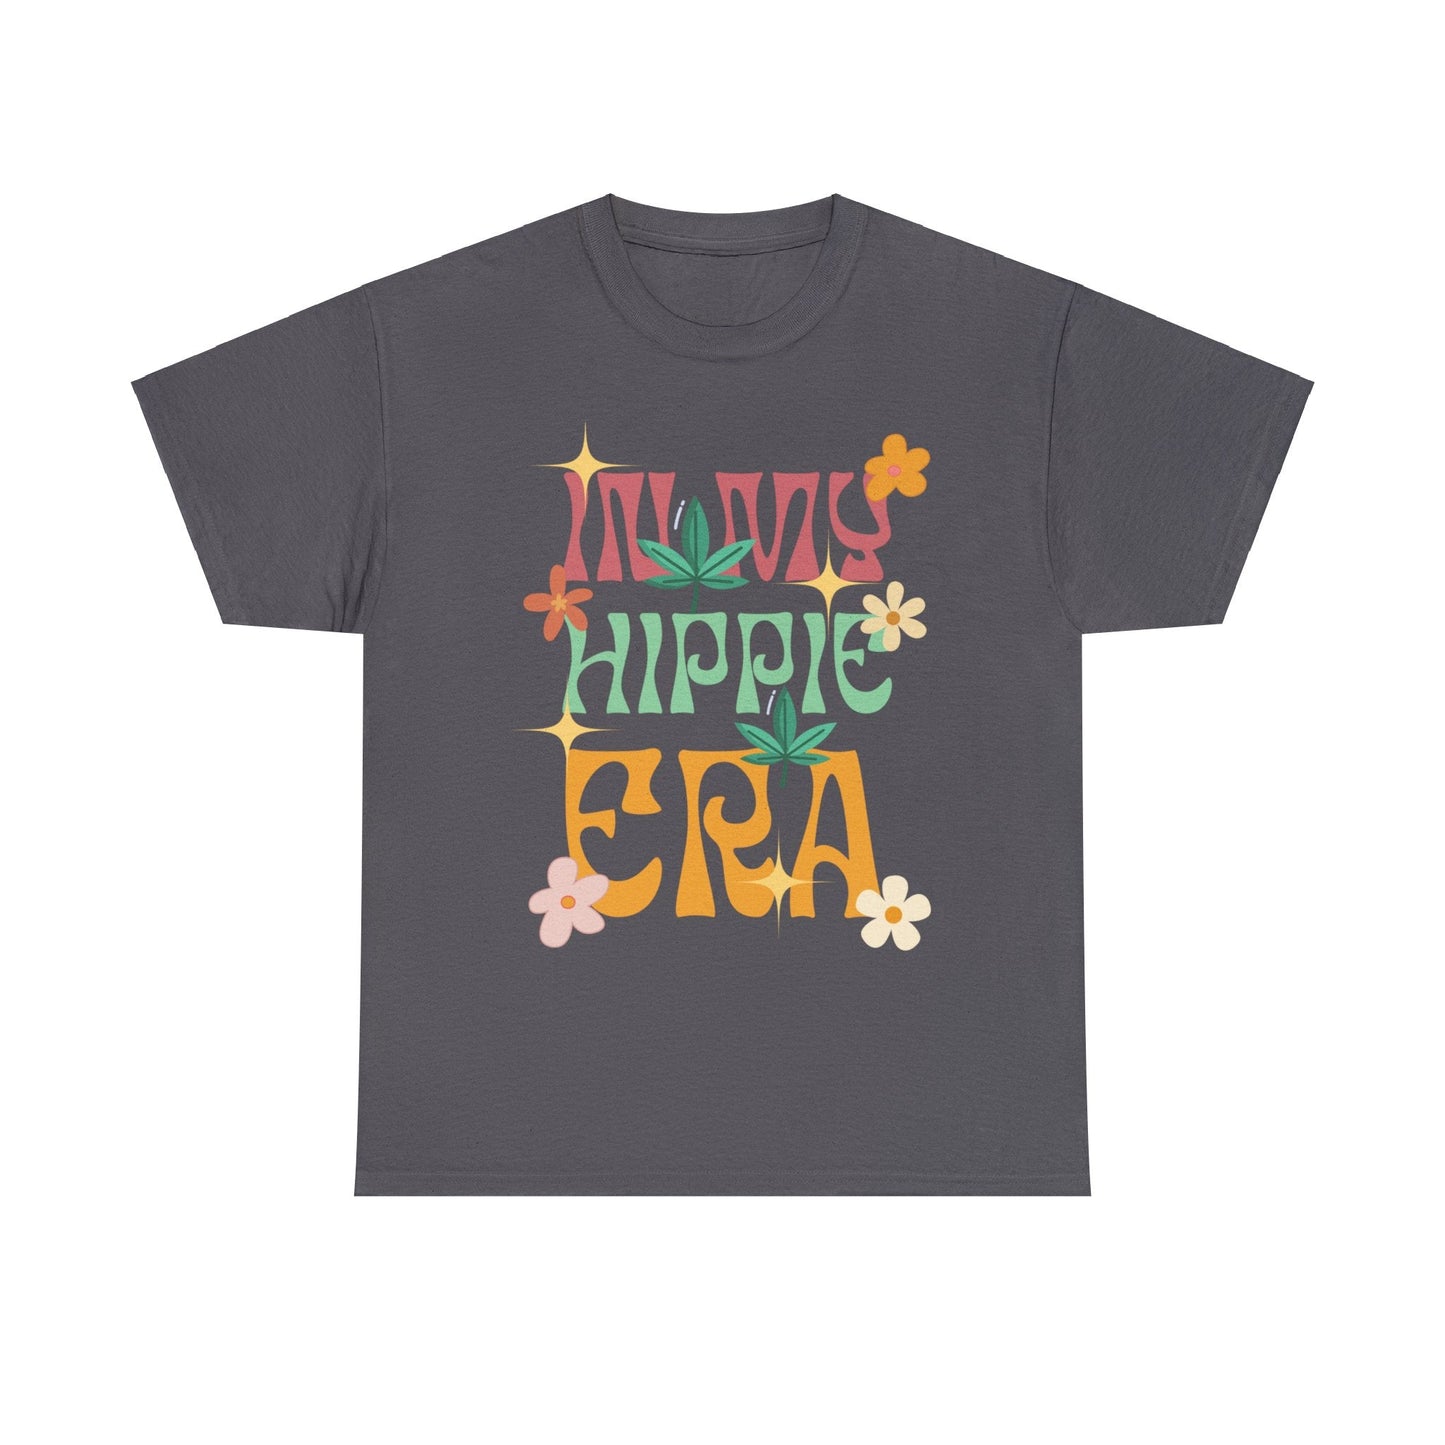 In My Hippie Era Shirt, Hippie Shirt, Gift for Hippies , Favourite Hippie Shirt, Hippie Gift from Daughter, Cool Hippie Shirt, Tee for Hippies - Moikas